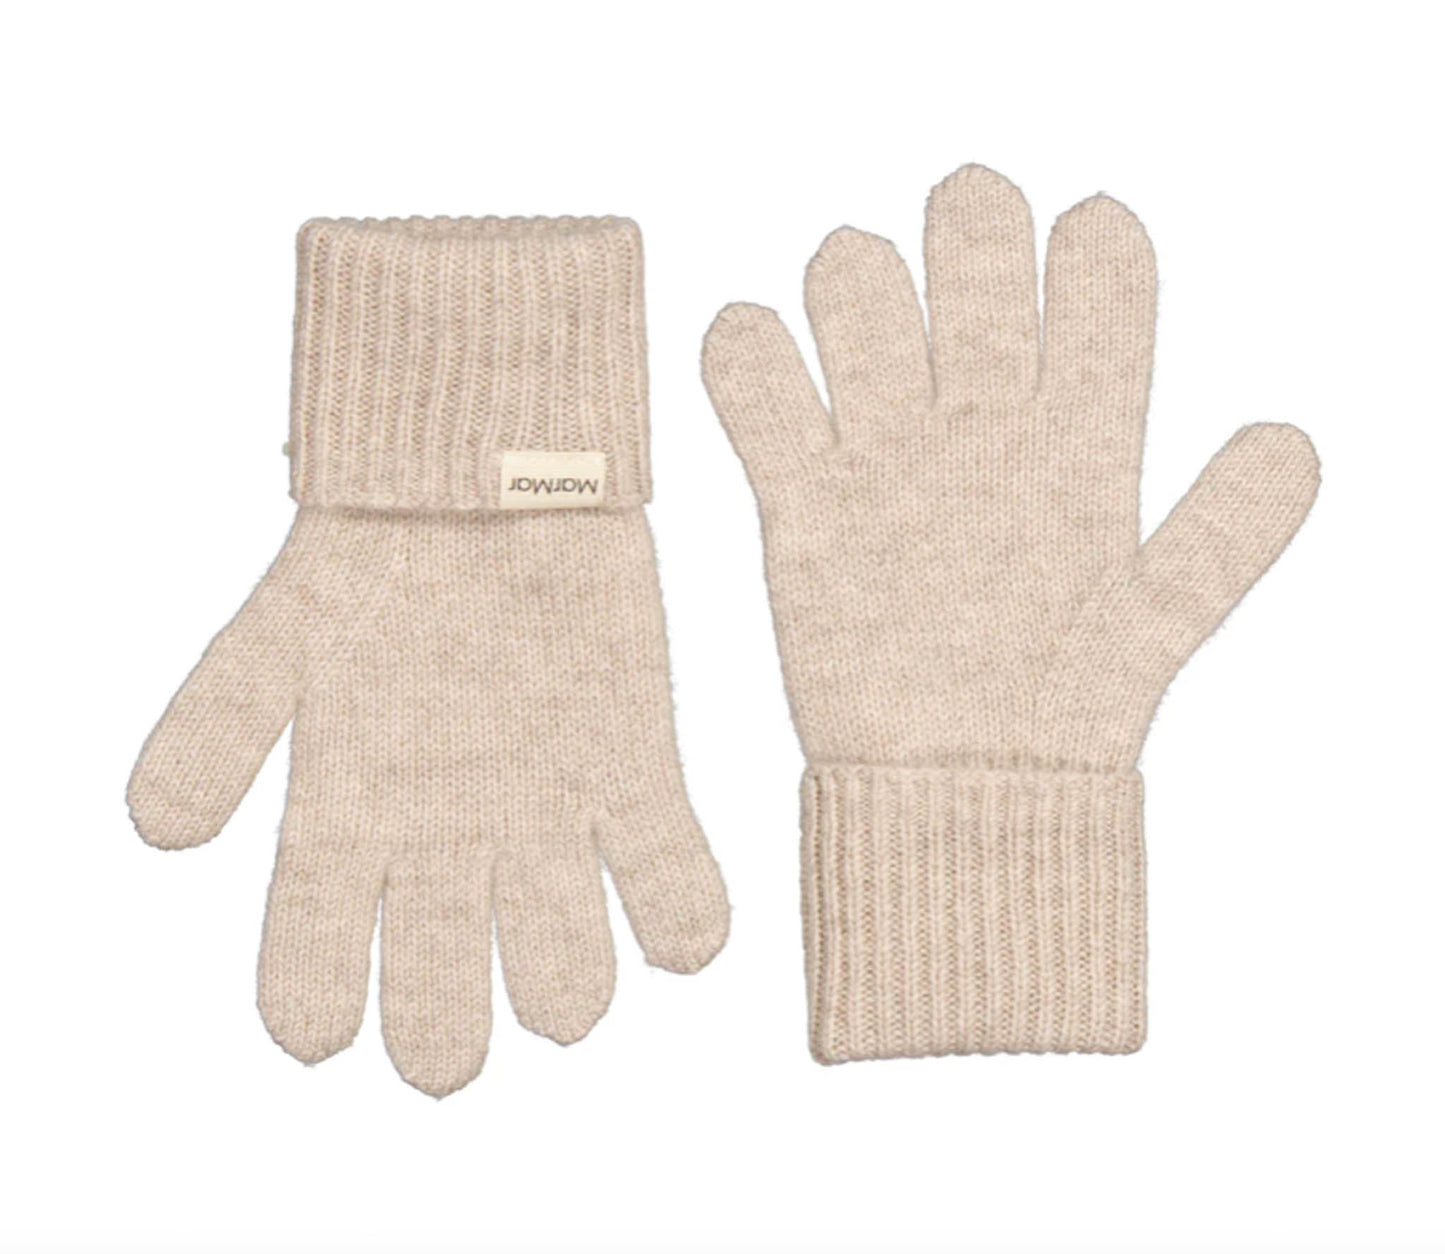 MarMar Copenhagen - Handschuhe Kaschmir "Aske Long" Kind |  sand melange / beige - Leja Concept Store